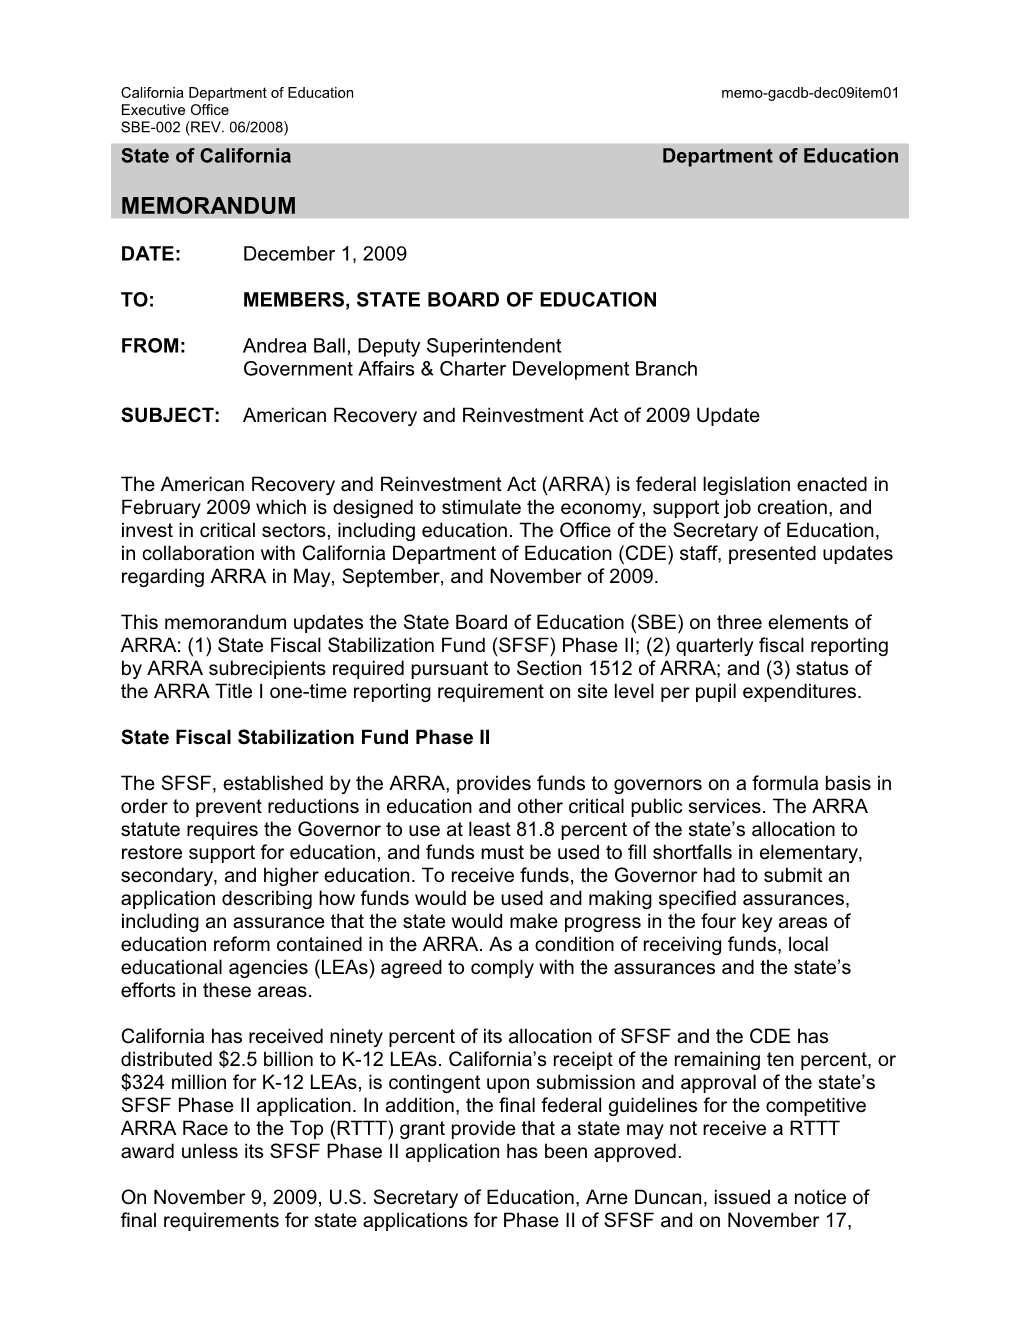 December 2009 GACDB Item 02 - Information Memorandum (CA State Board of Education)